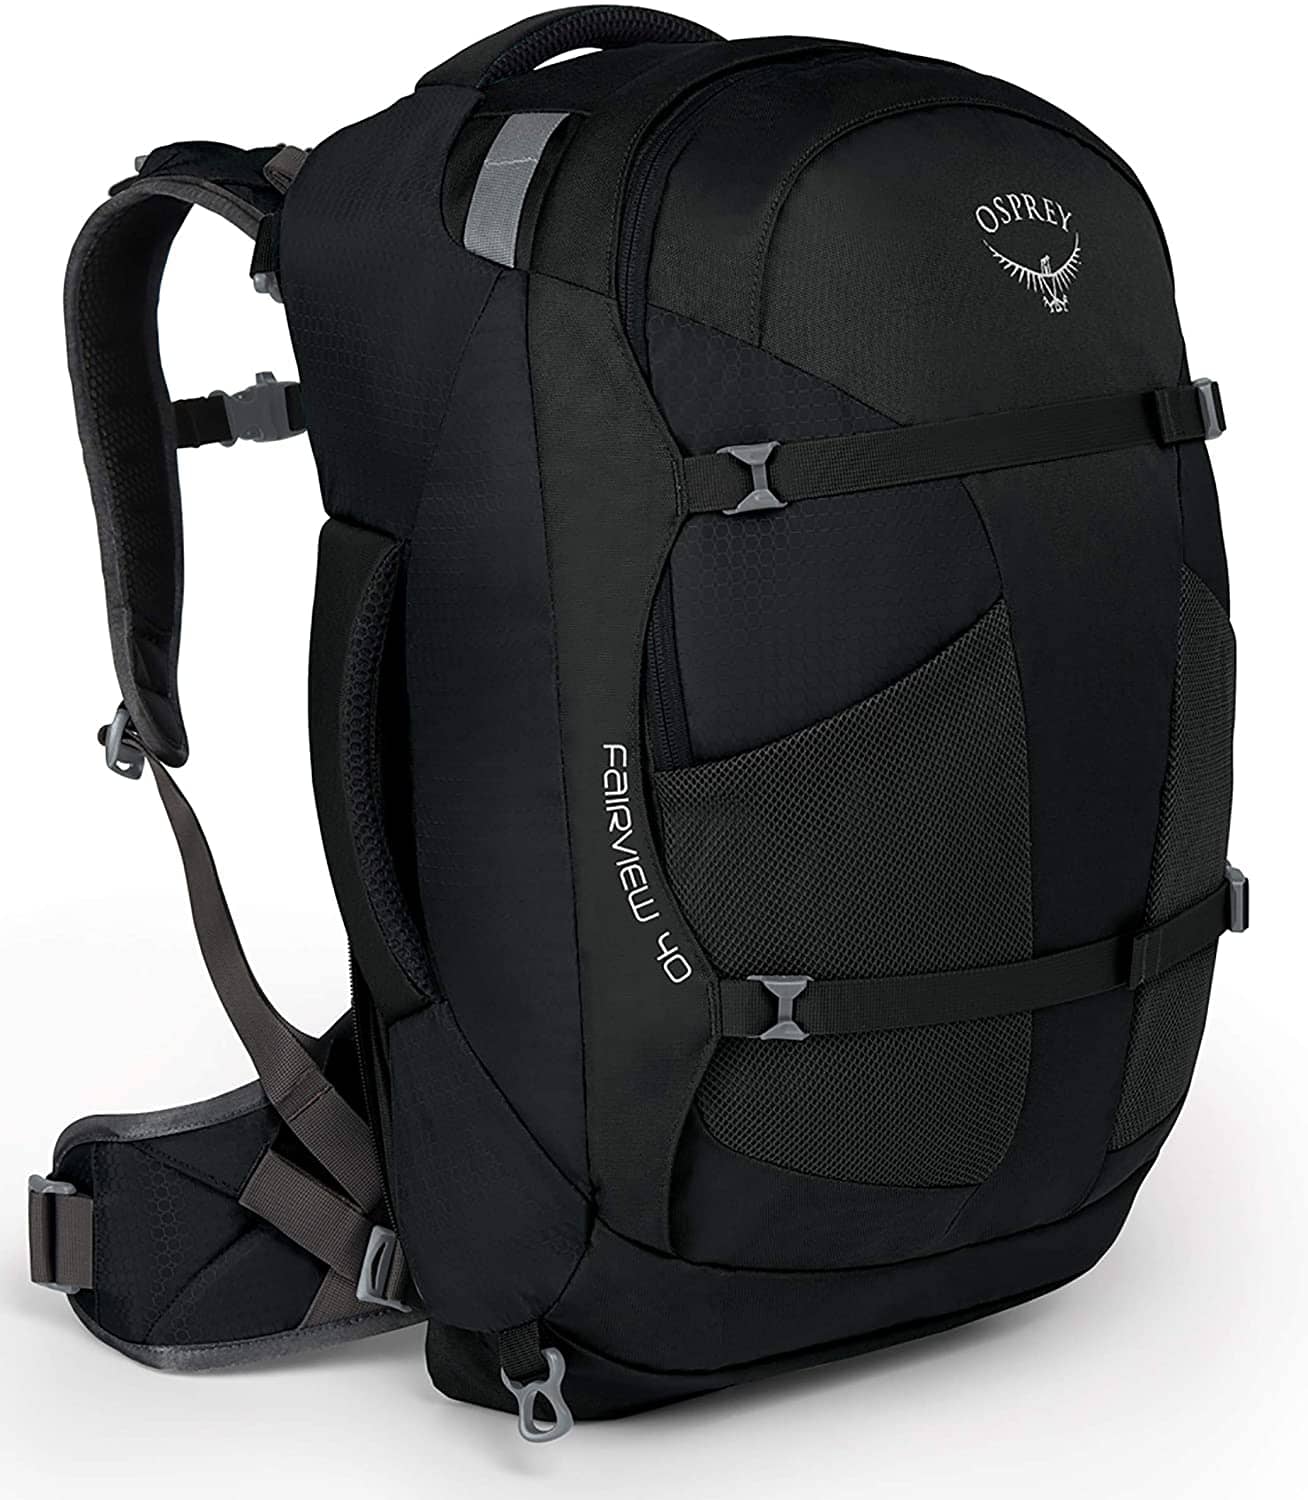 Best Carry On Backpack - Best Travel Backpack for Women - Osprey